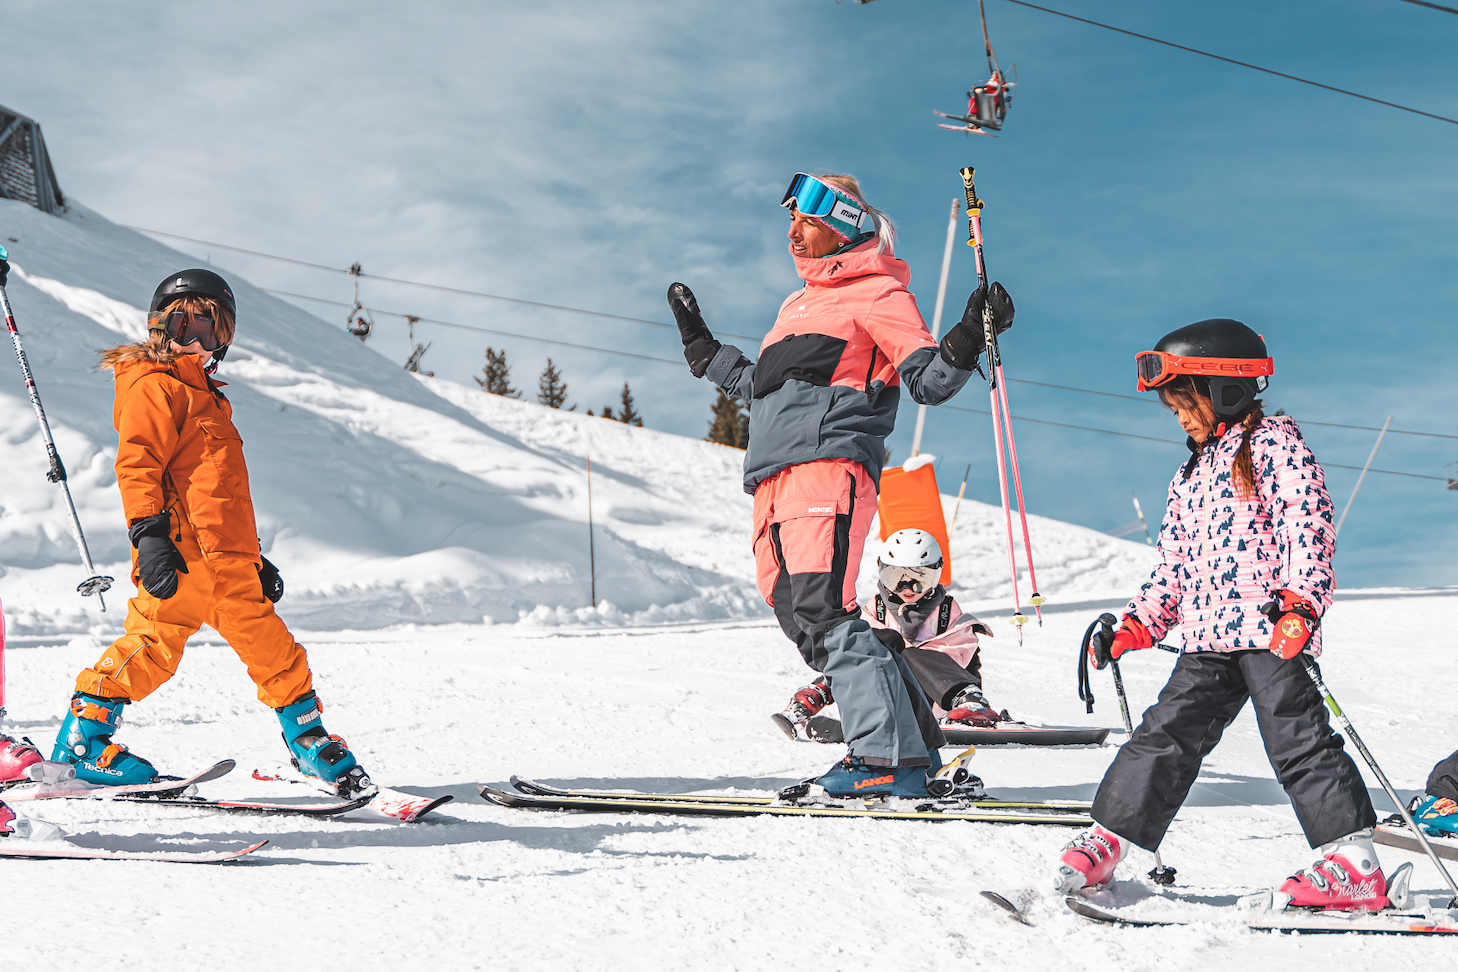 Top 5 Ski Resorts in Italy for Beginner Skiing